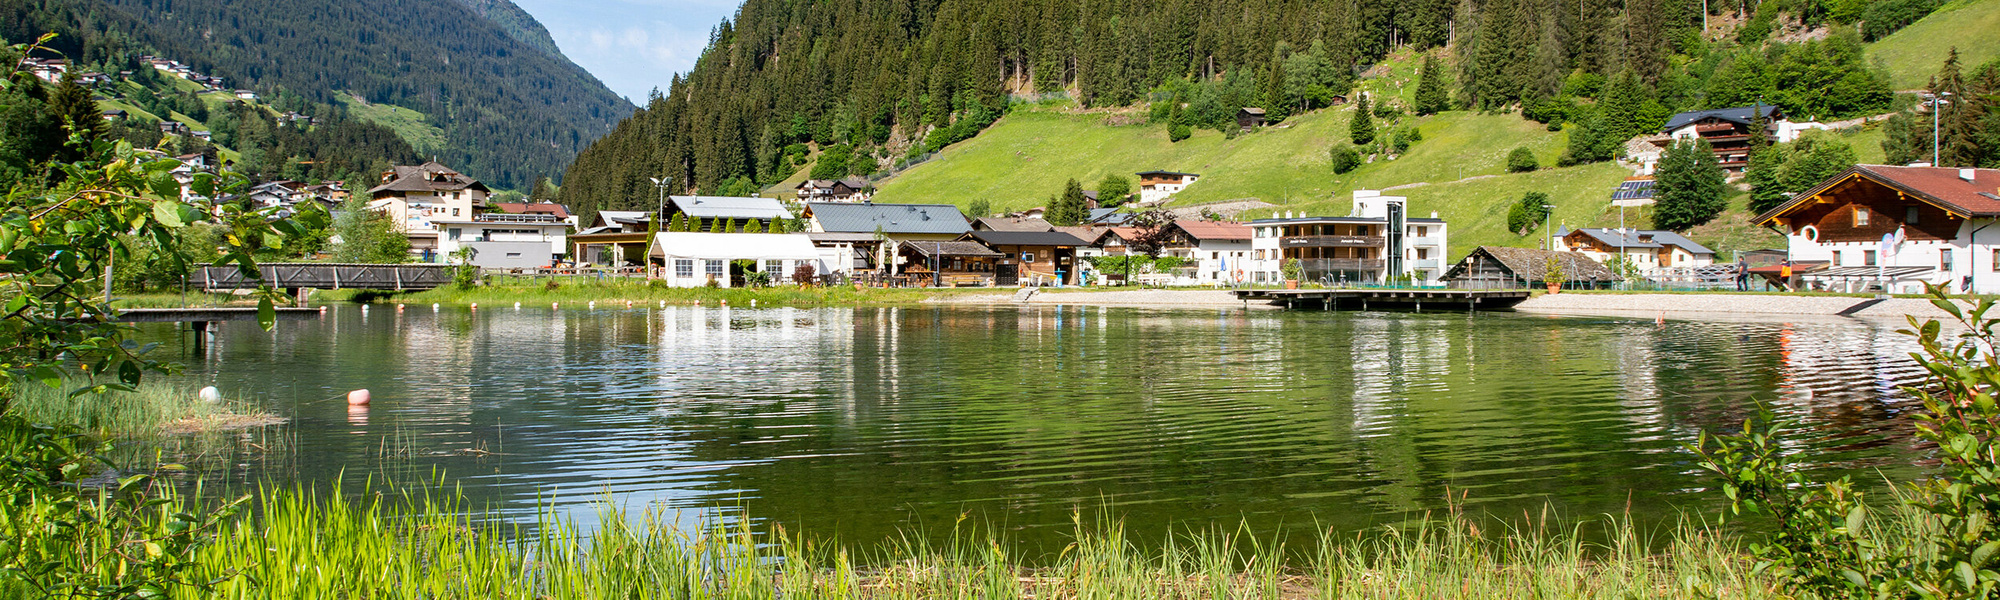 ©TVB Paznaun-Ischgl Swimming lake in See